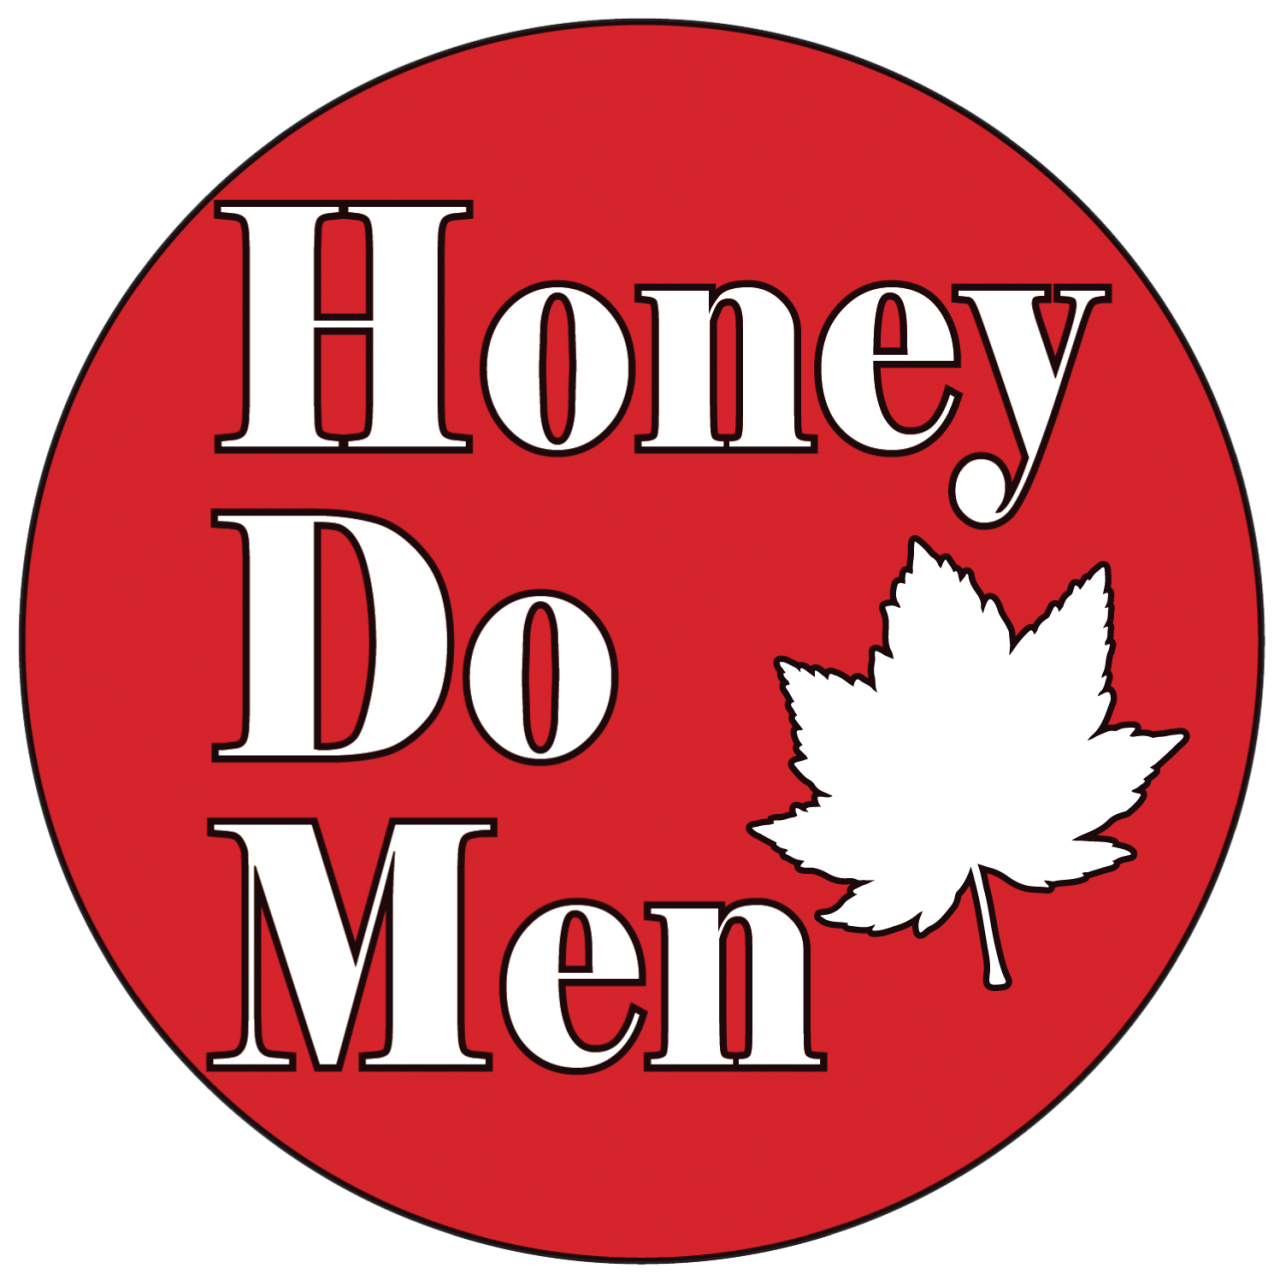 Honey-Do-Men Logos Web Avatar 4